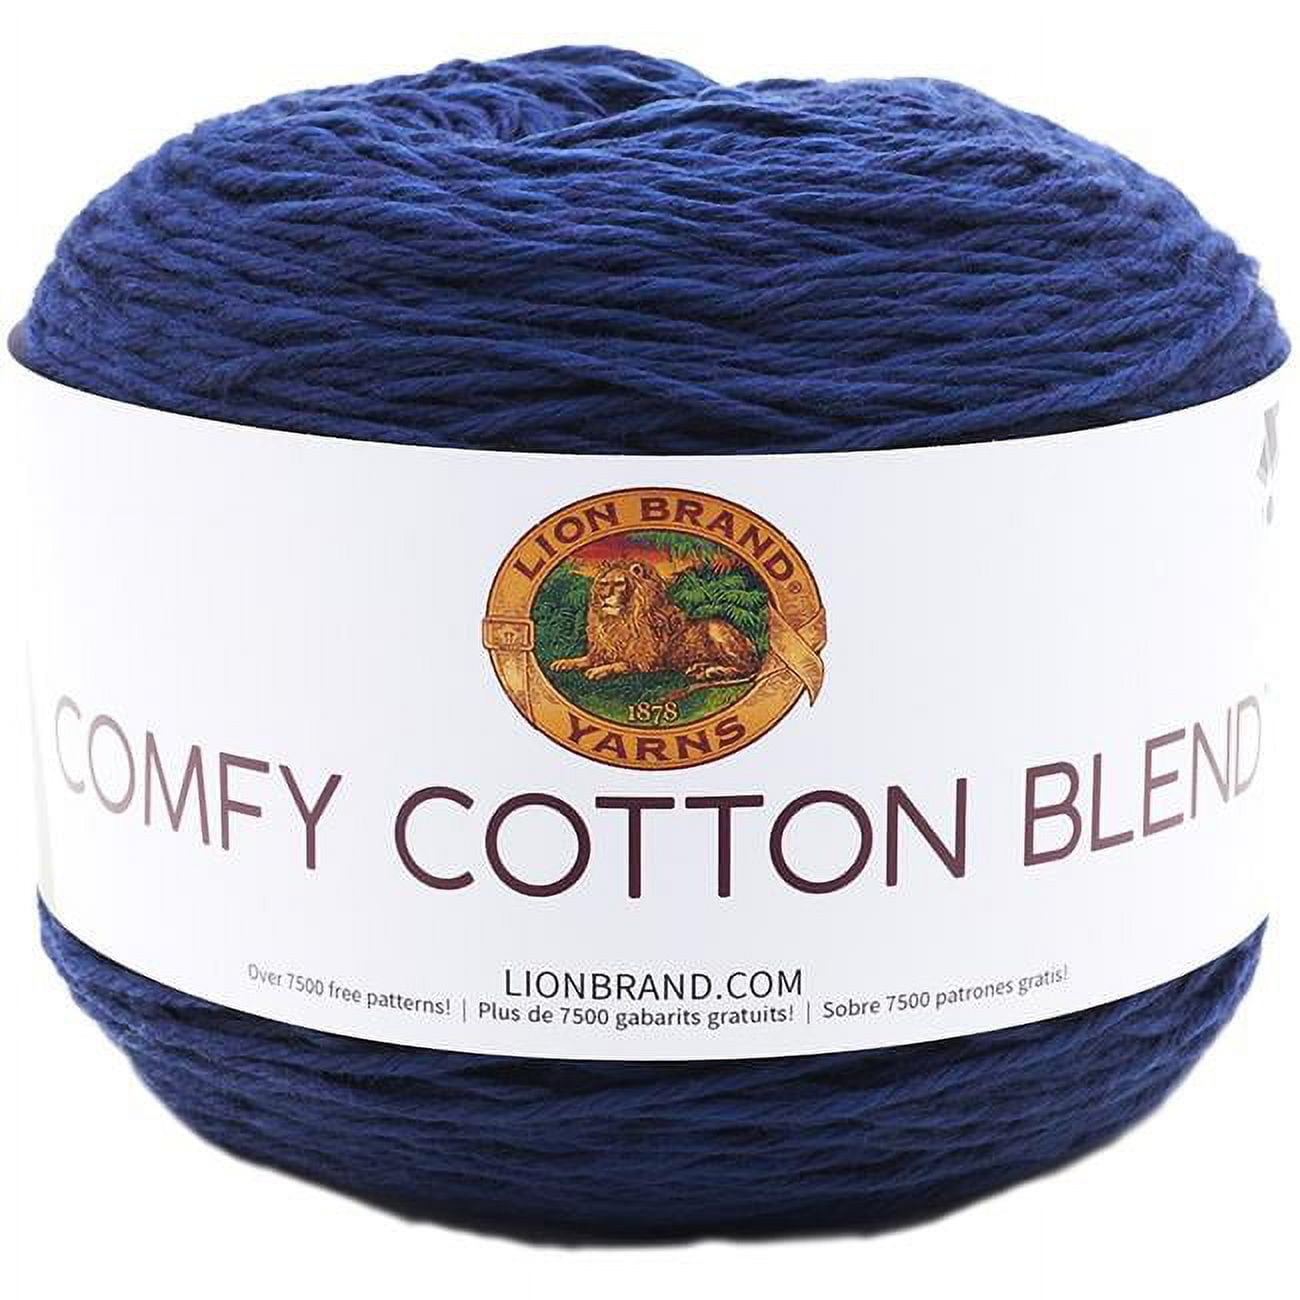 Lion Brand Yarn Comfy Cotton Blend Spectrum Yarn